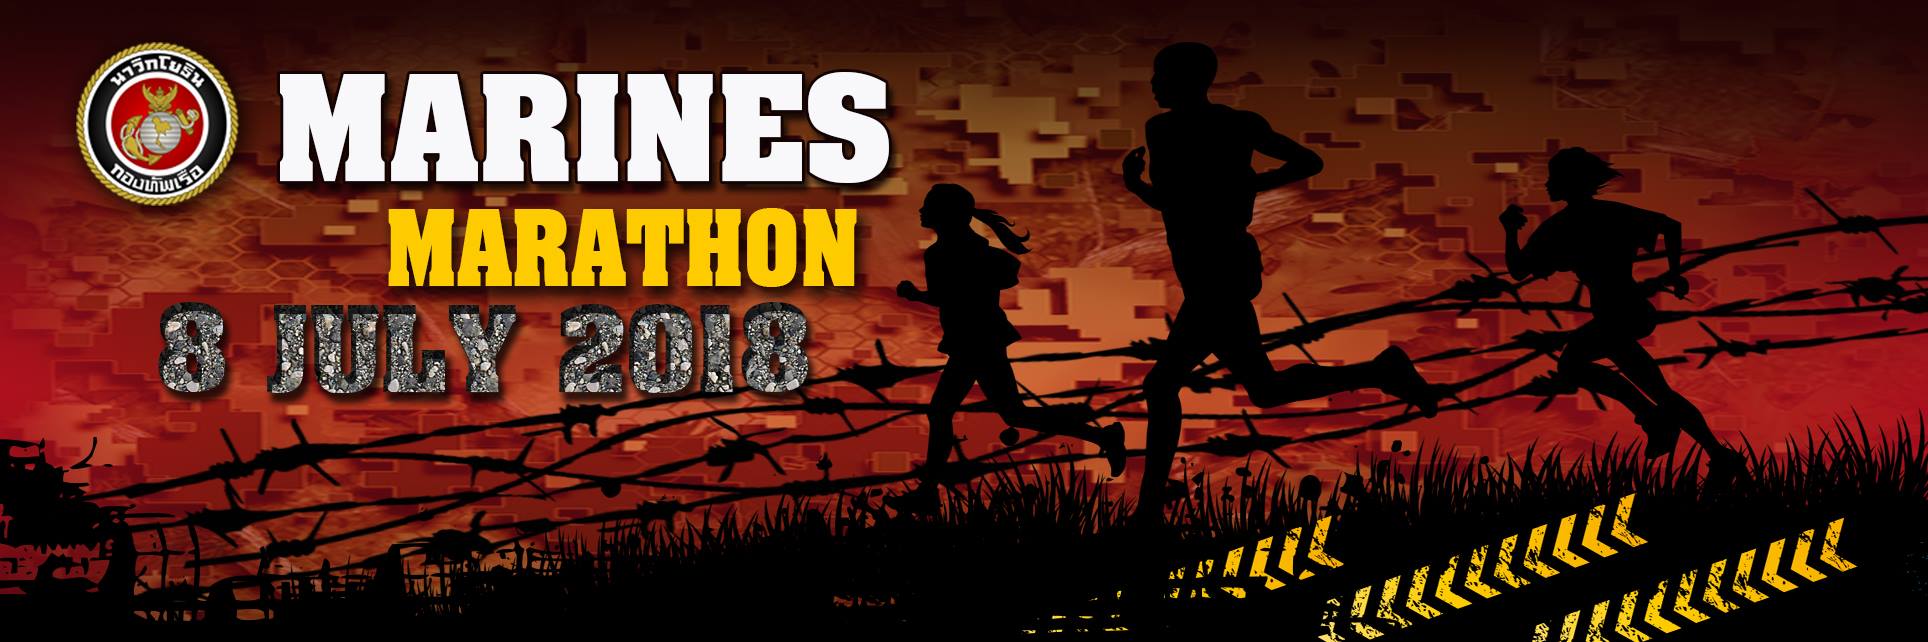 Marines Marathon 2018